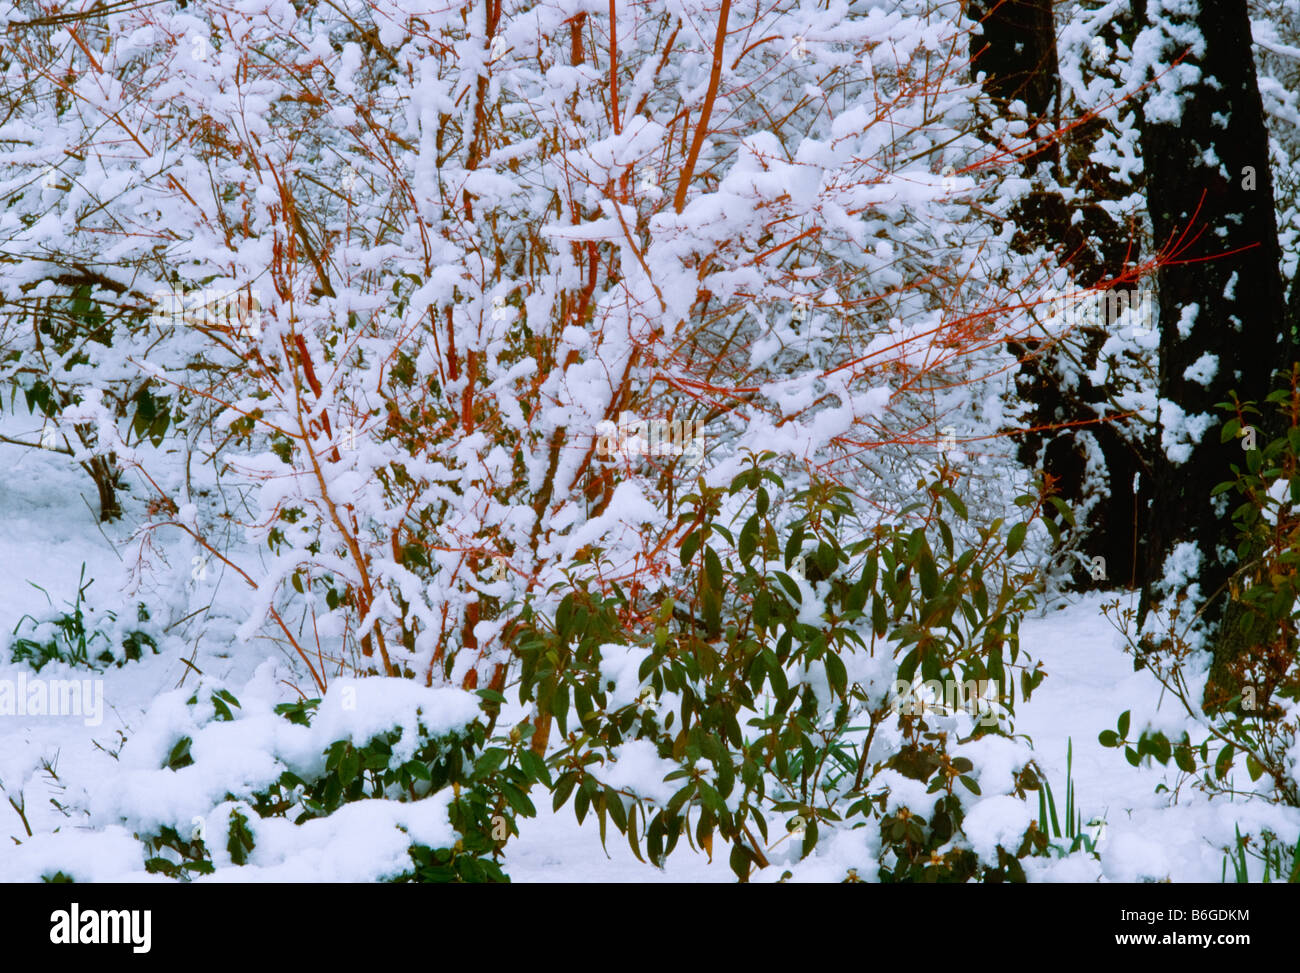 Garden in winter with colorful bark of Cornus stonlonifera syn. Cornus sericea and evergreen Kalmia latifolia (mountain laurel) Stock Photo